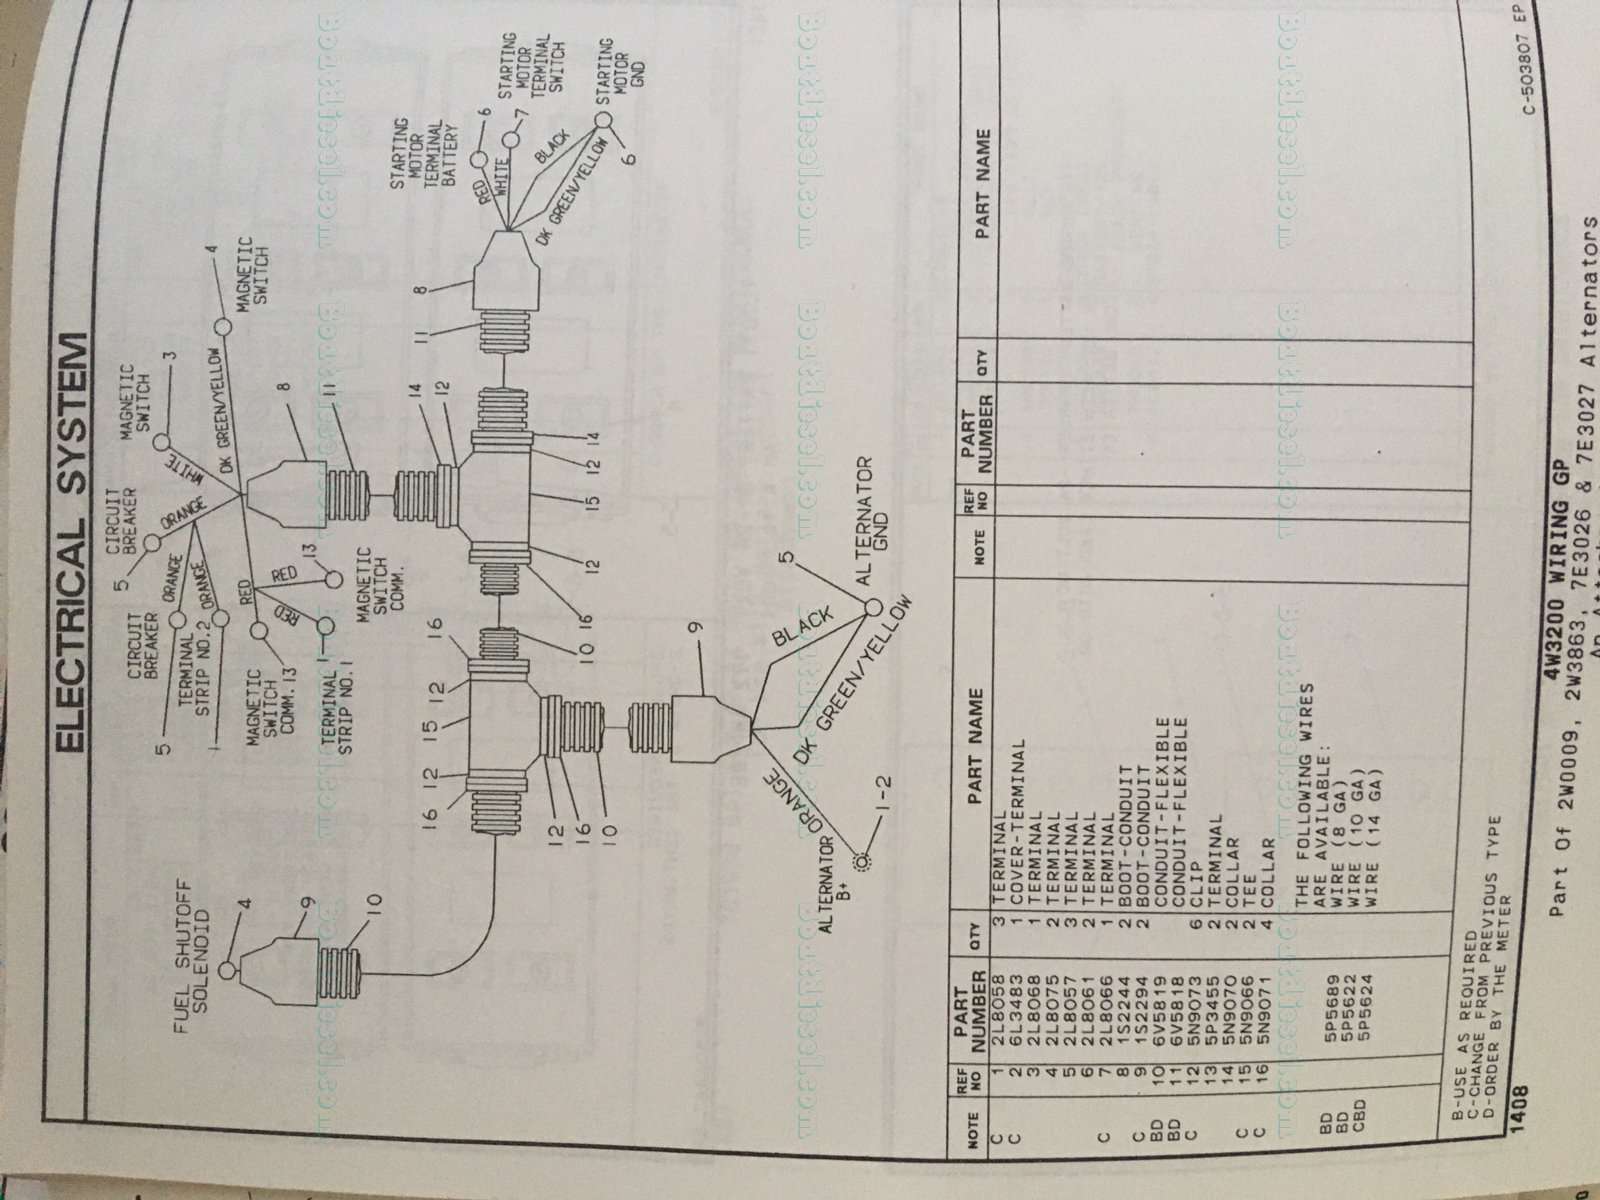 Caterpillar:3208 Series - 3208ta wiring diagram / schematic required